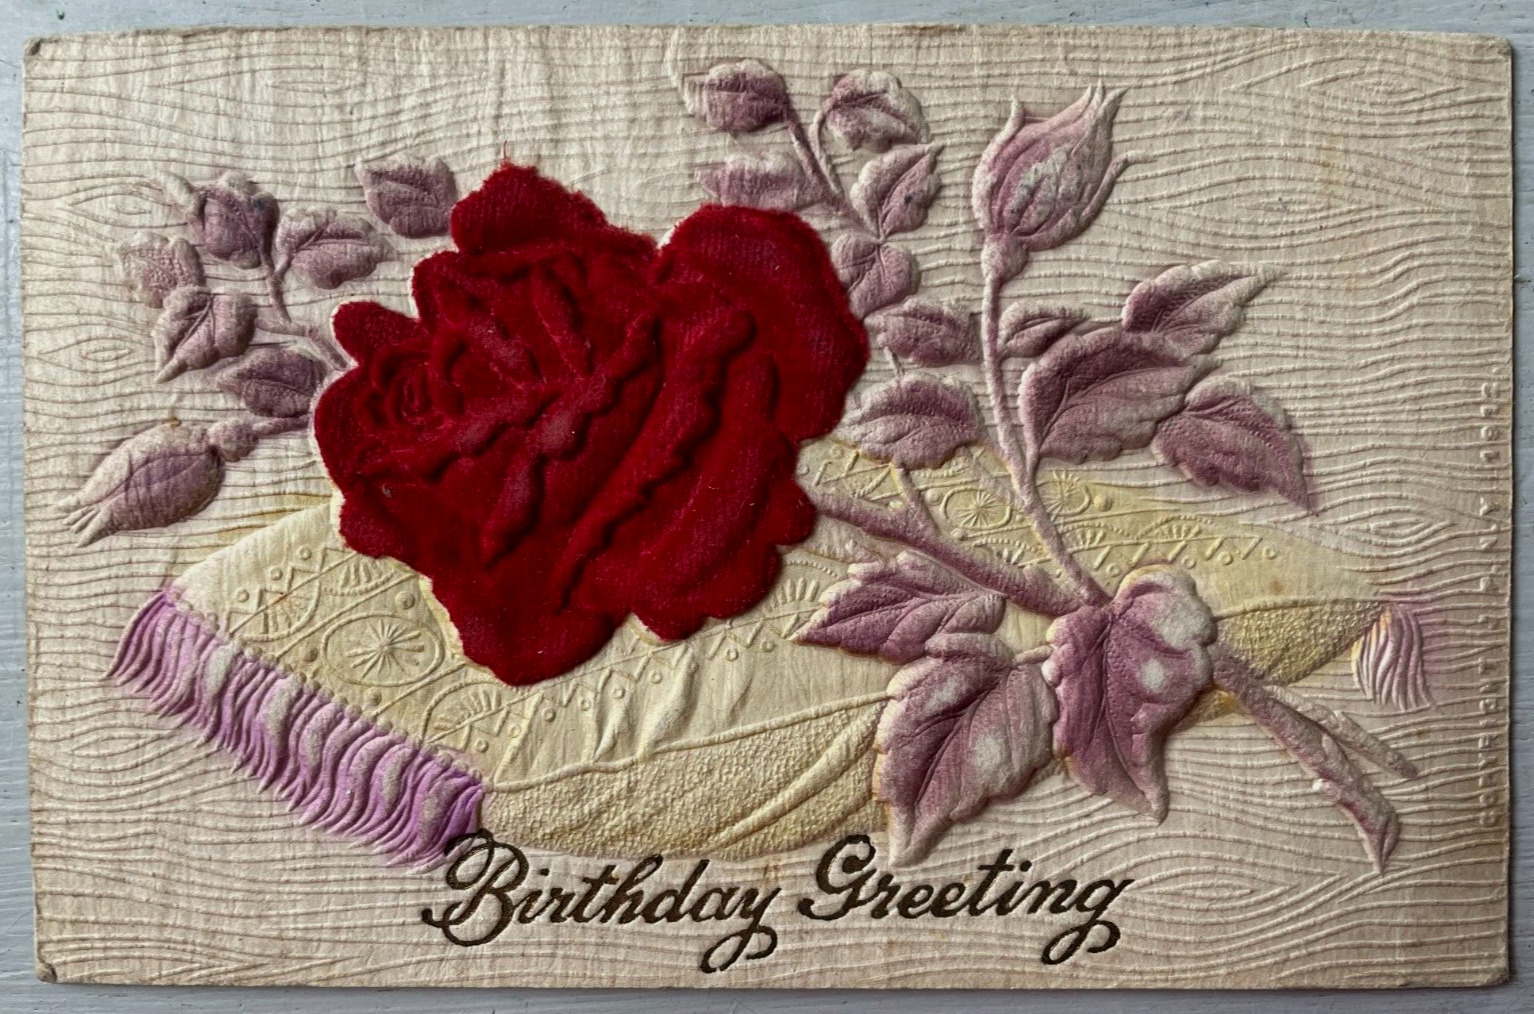 Vintage Victorian Postcard 1912 Birthday Greeting - Red Flocked Velvet Roses